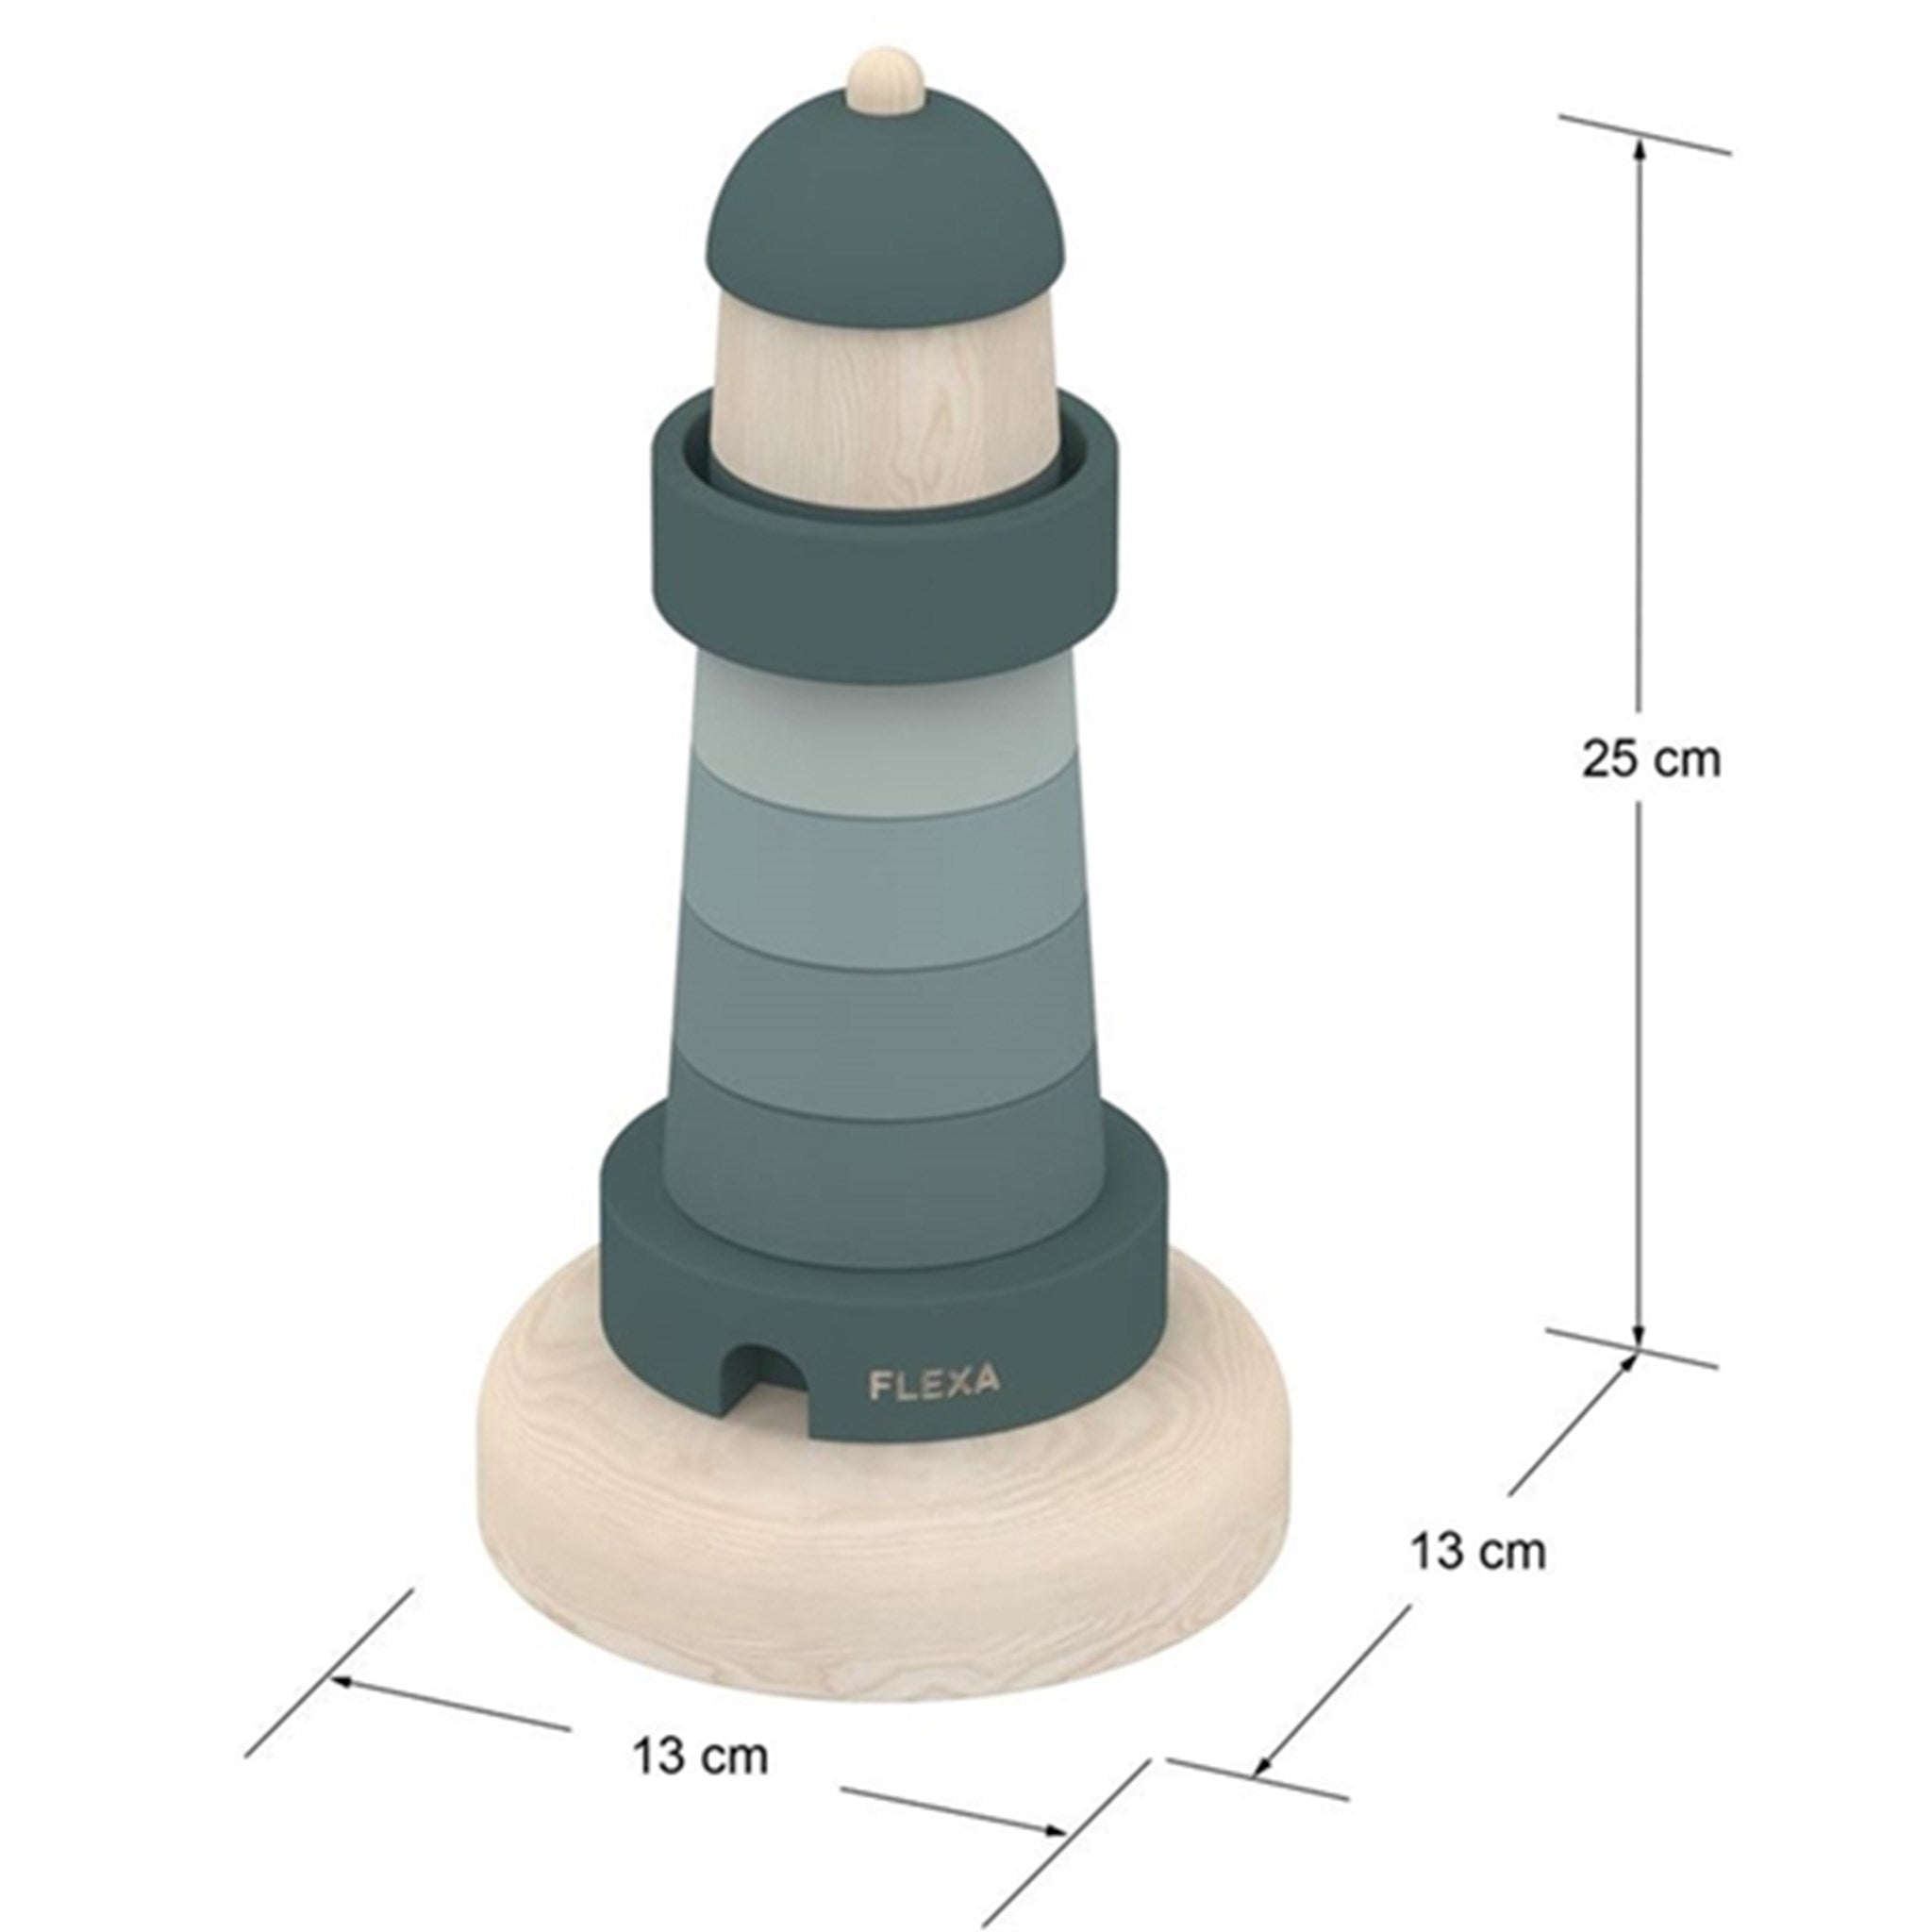 FLEXA PLAY Lighthouse Stacker Multi Color 6